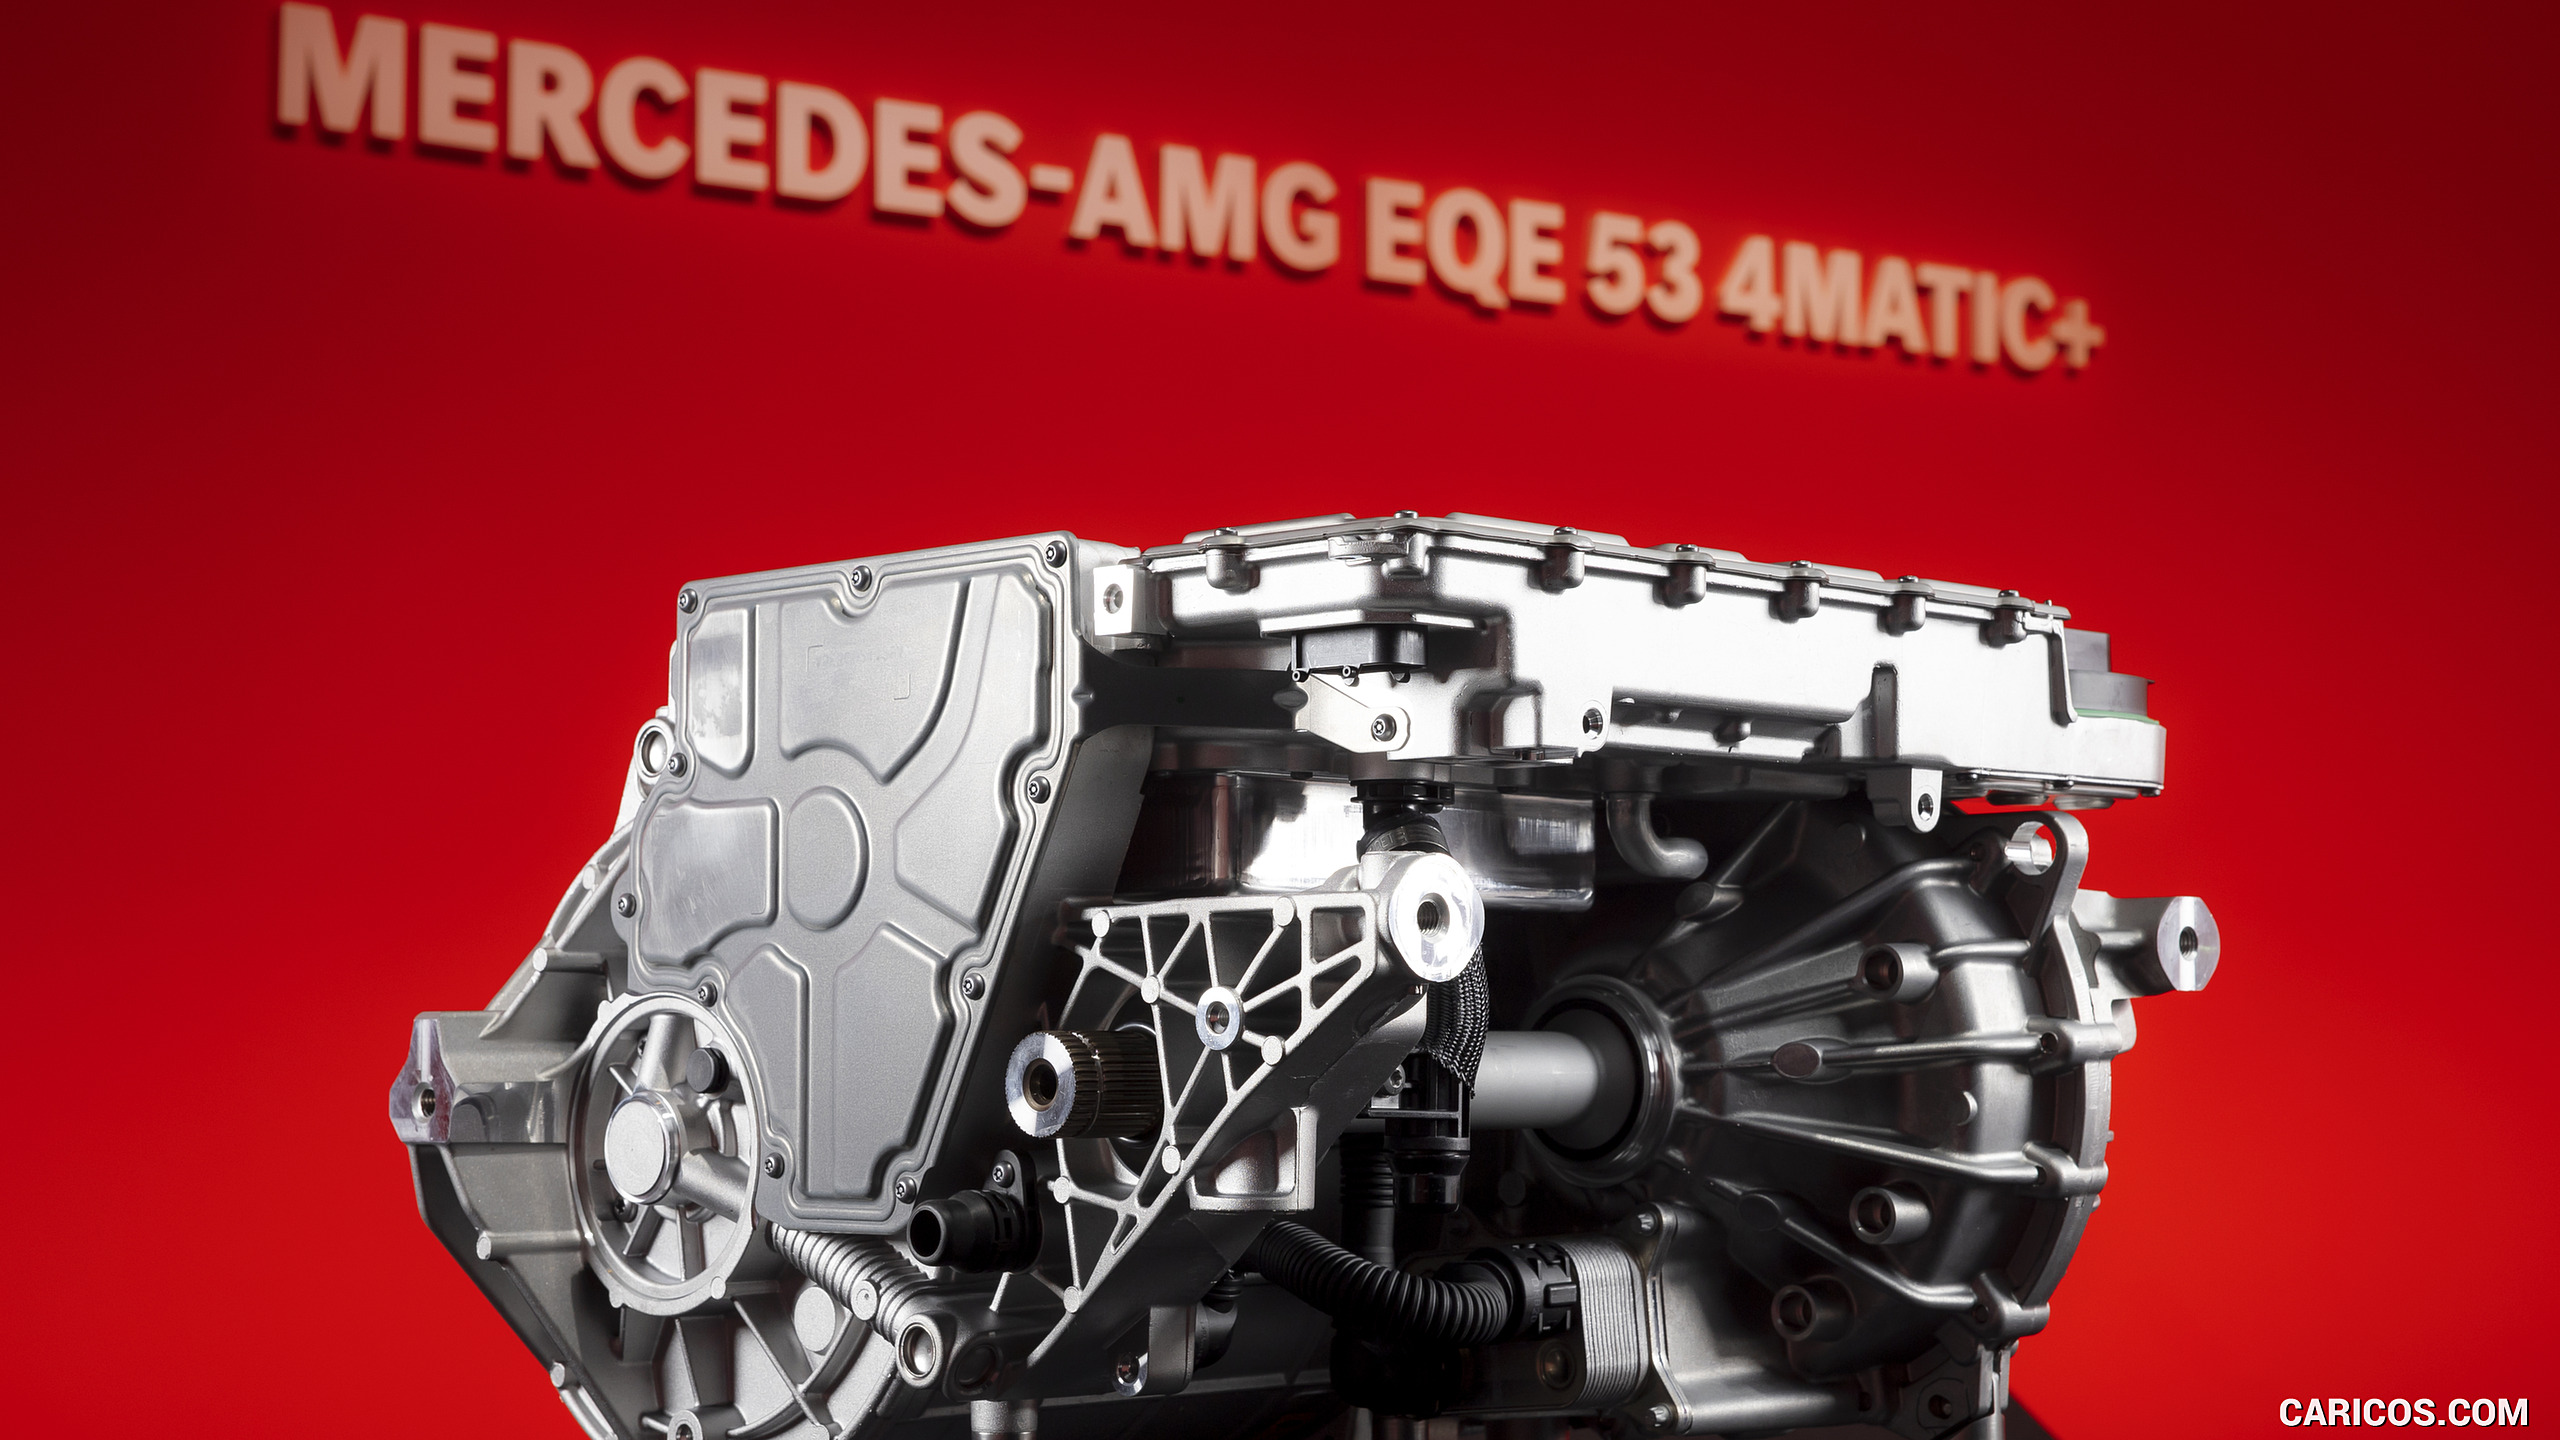 2023 Mercedes-AMG EQE - Technology, #100 of 239